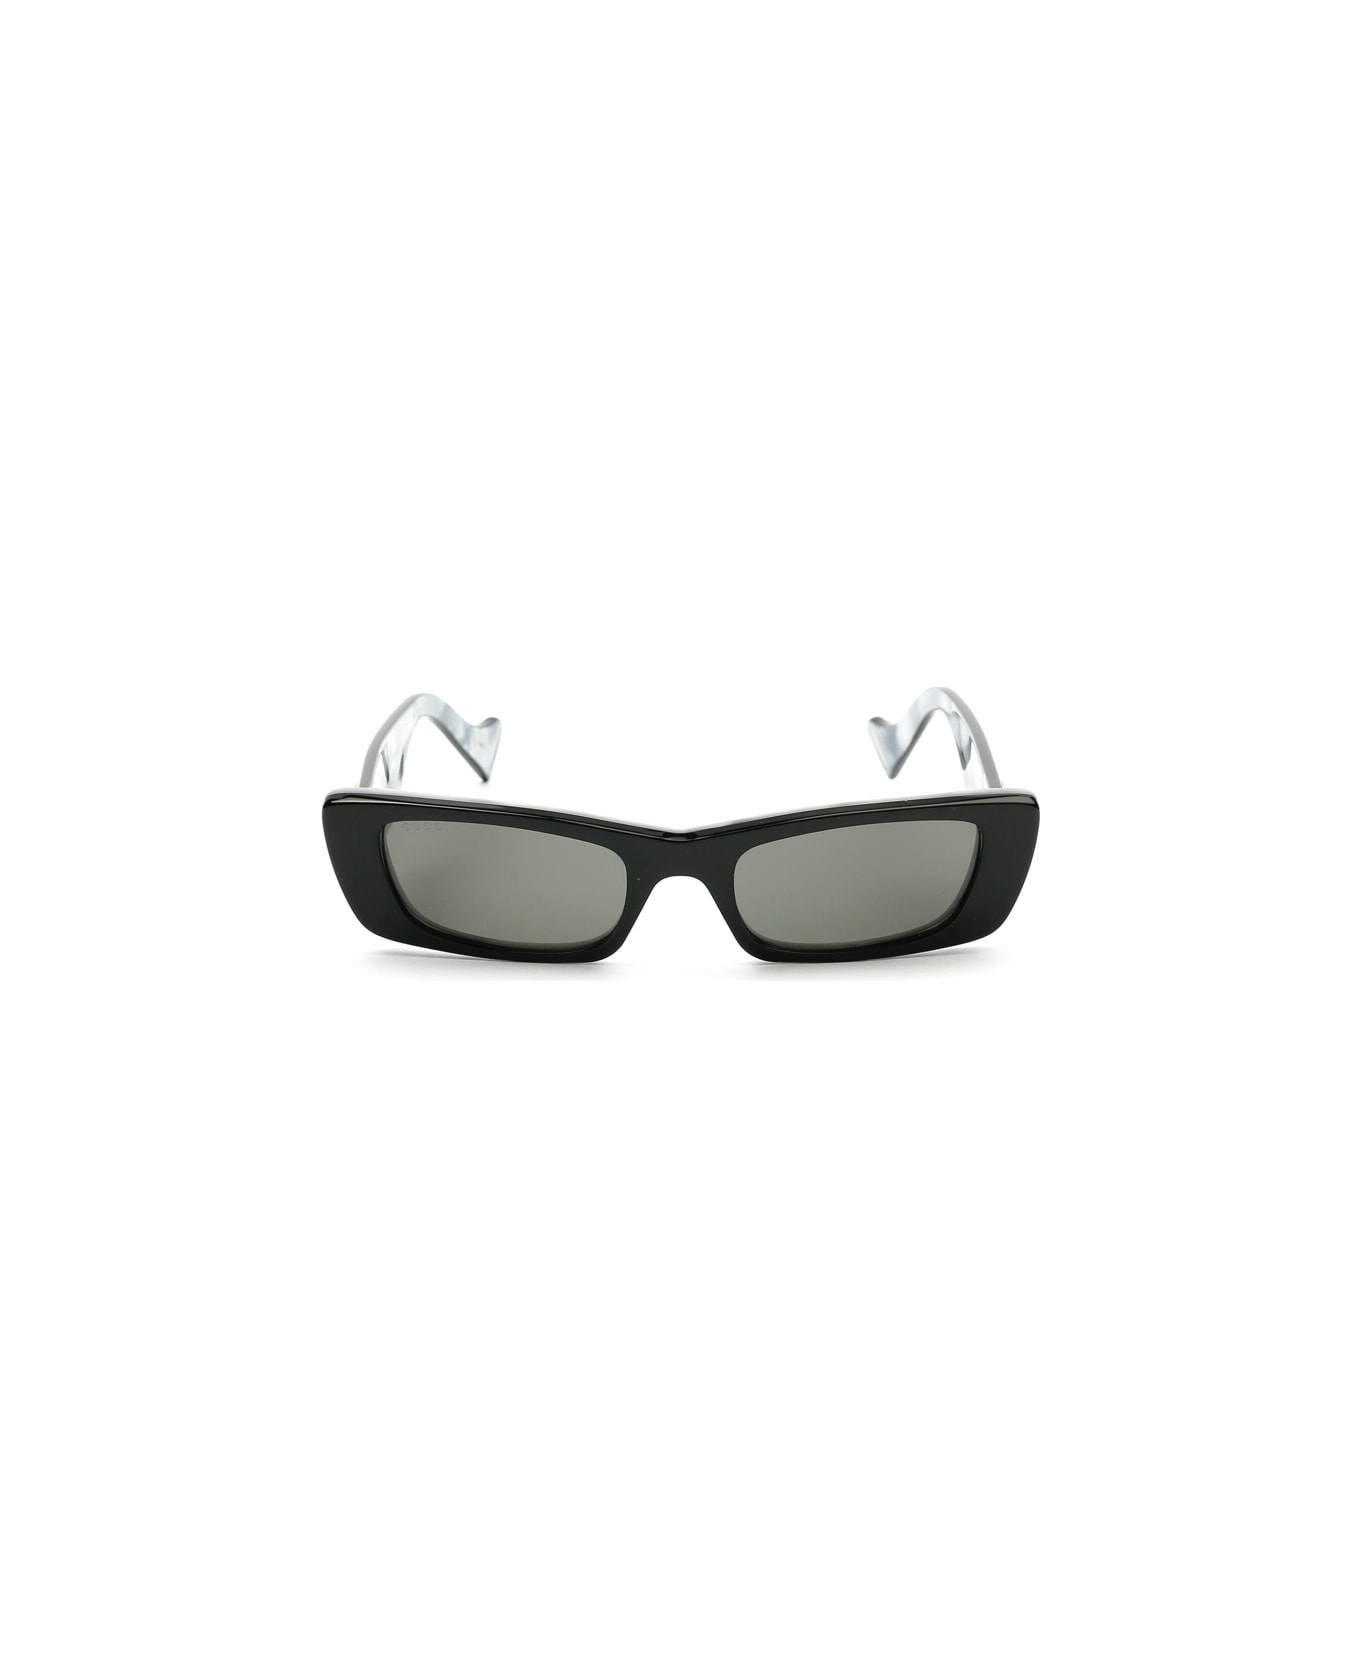 Gucci Eyewear GG0516S Sunglasses - Black Black Grey